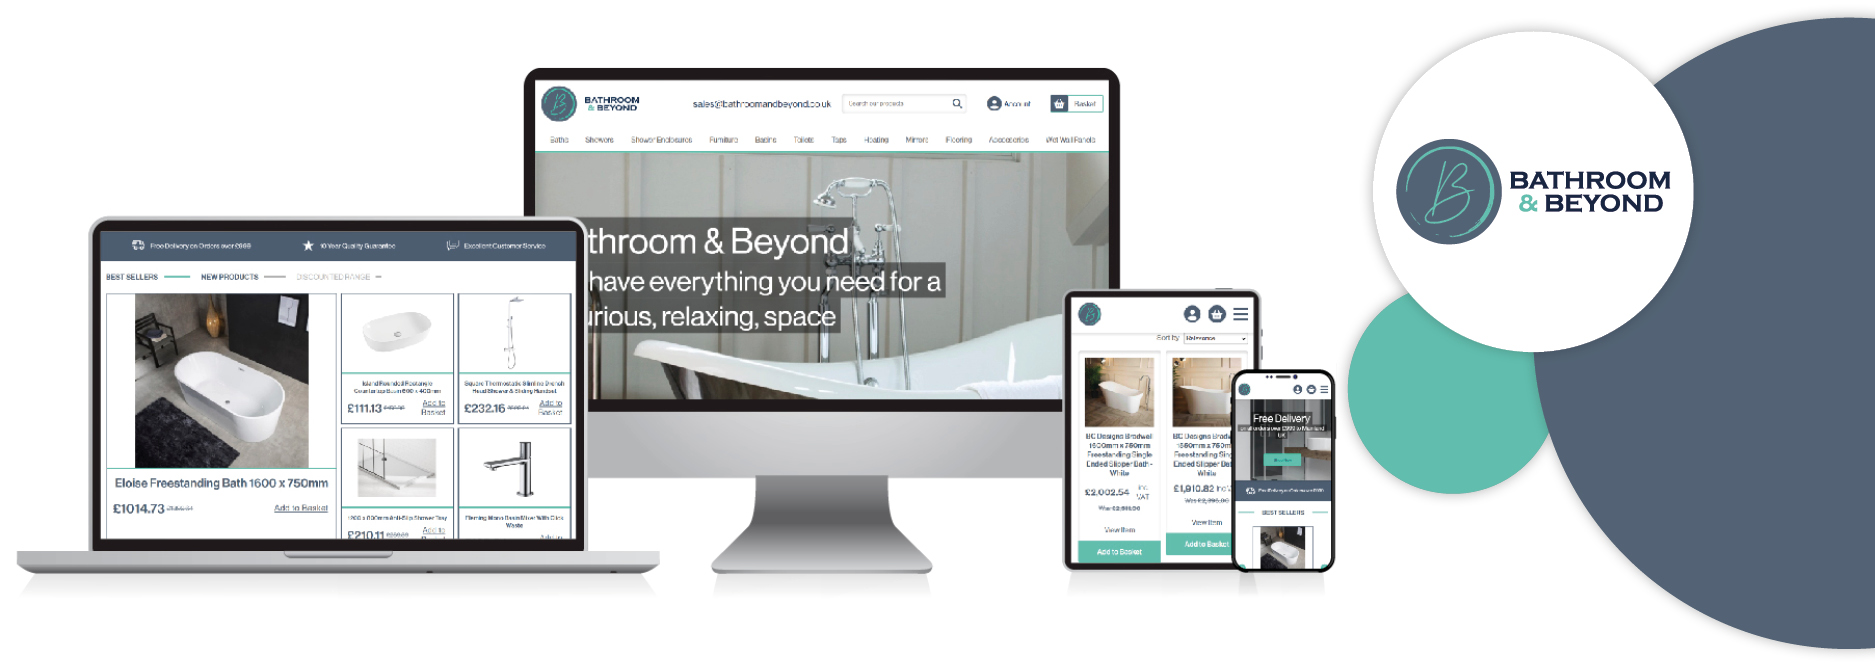 Bathroom & Beyond: New E-commerce Client Website